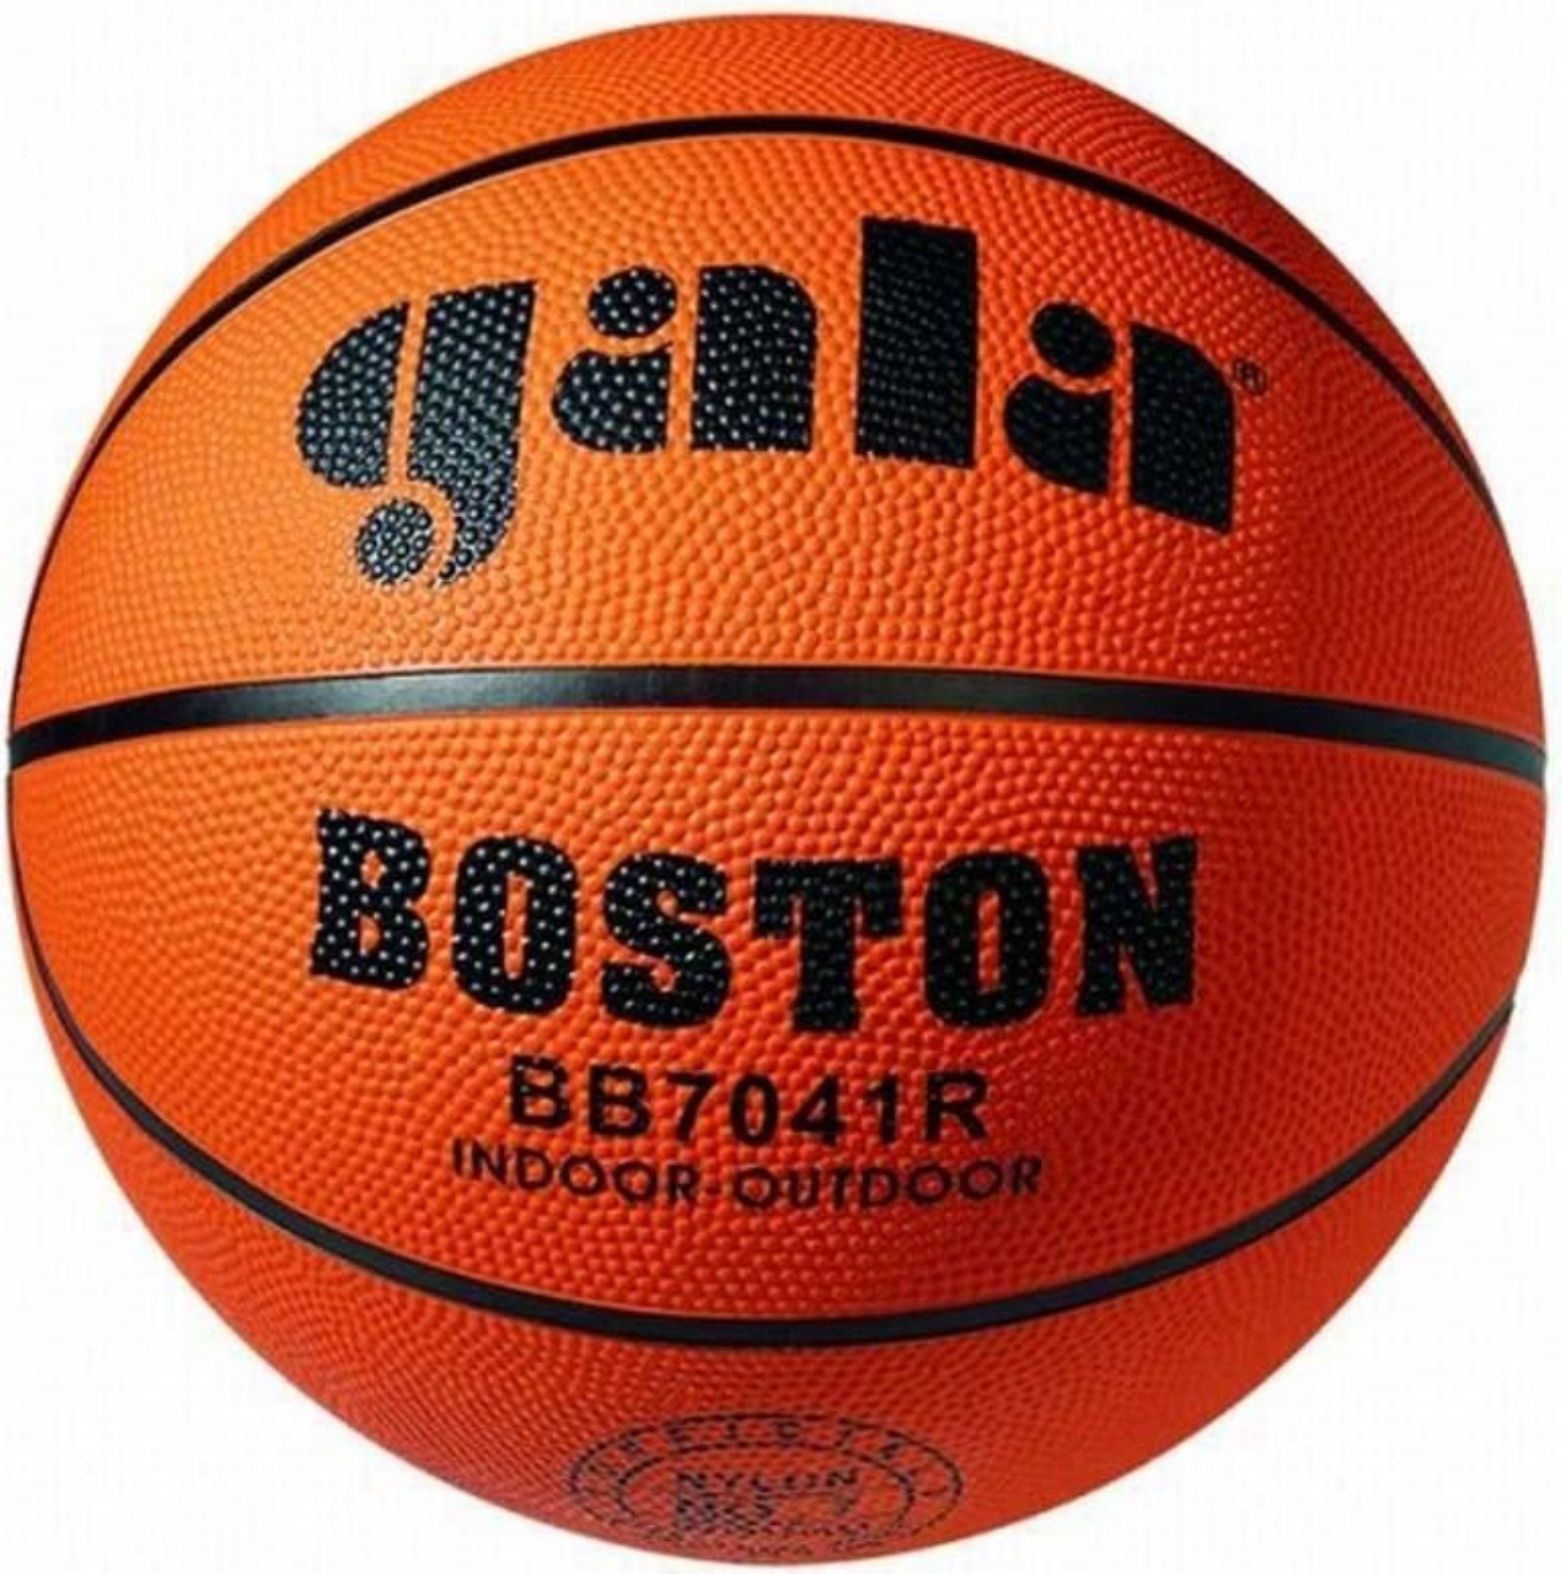 Basketbalový míč GALA Boston BB7041R - obrázek 1